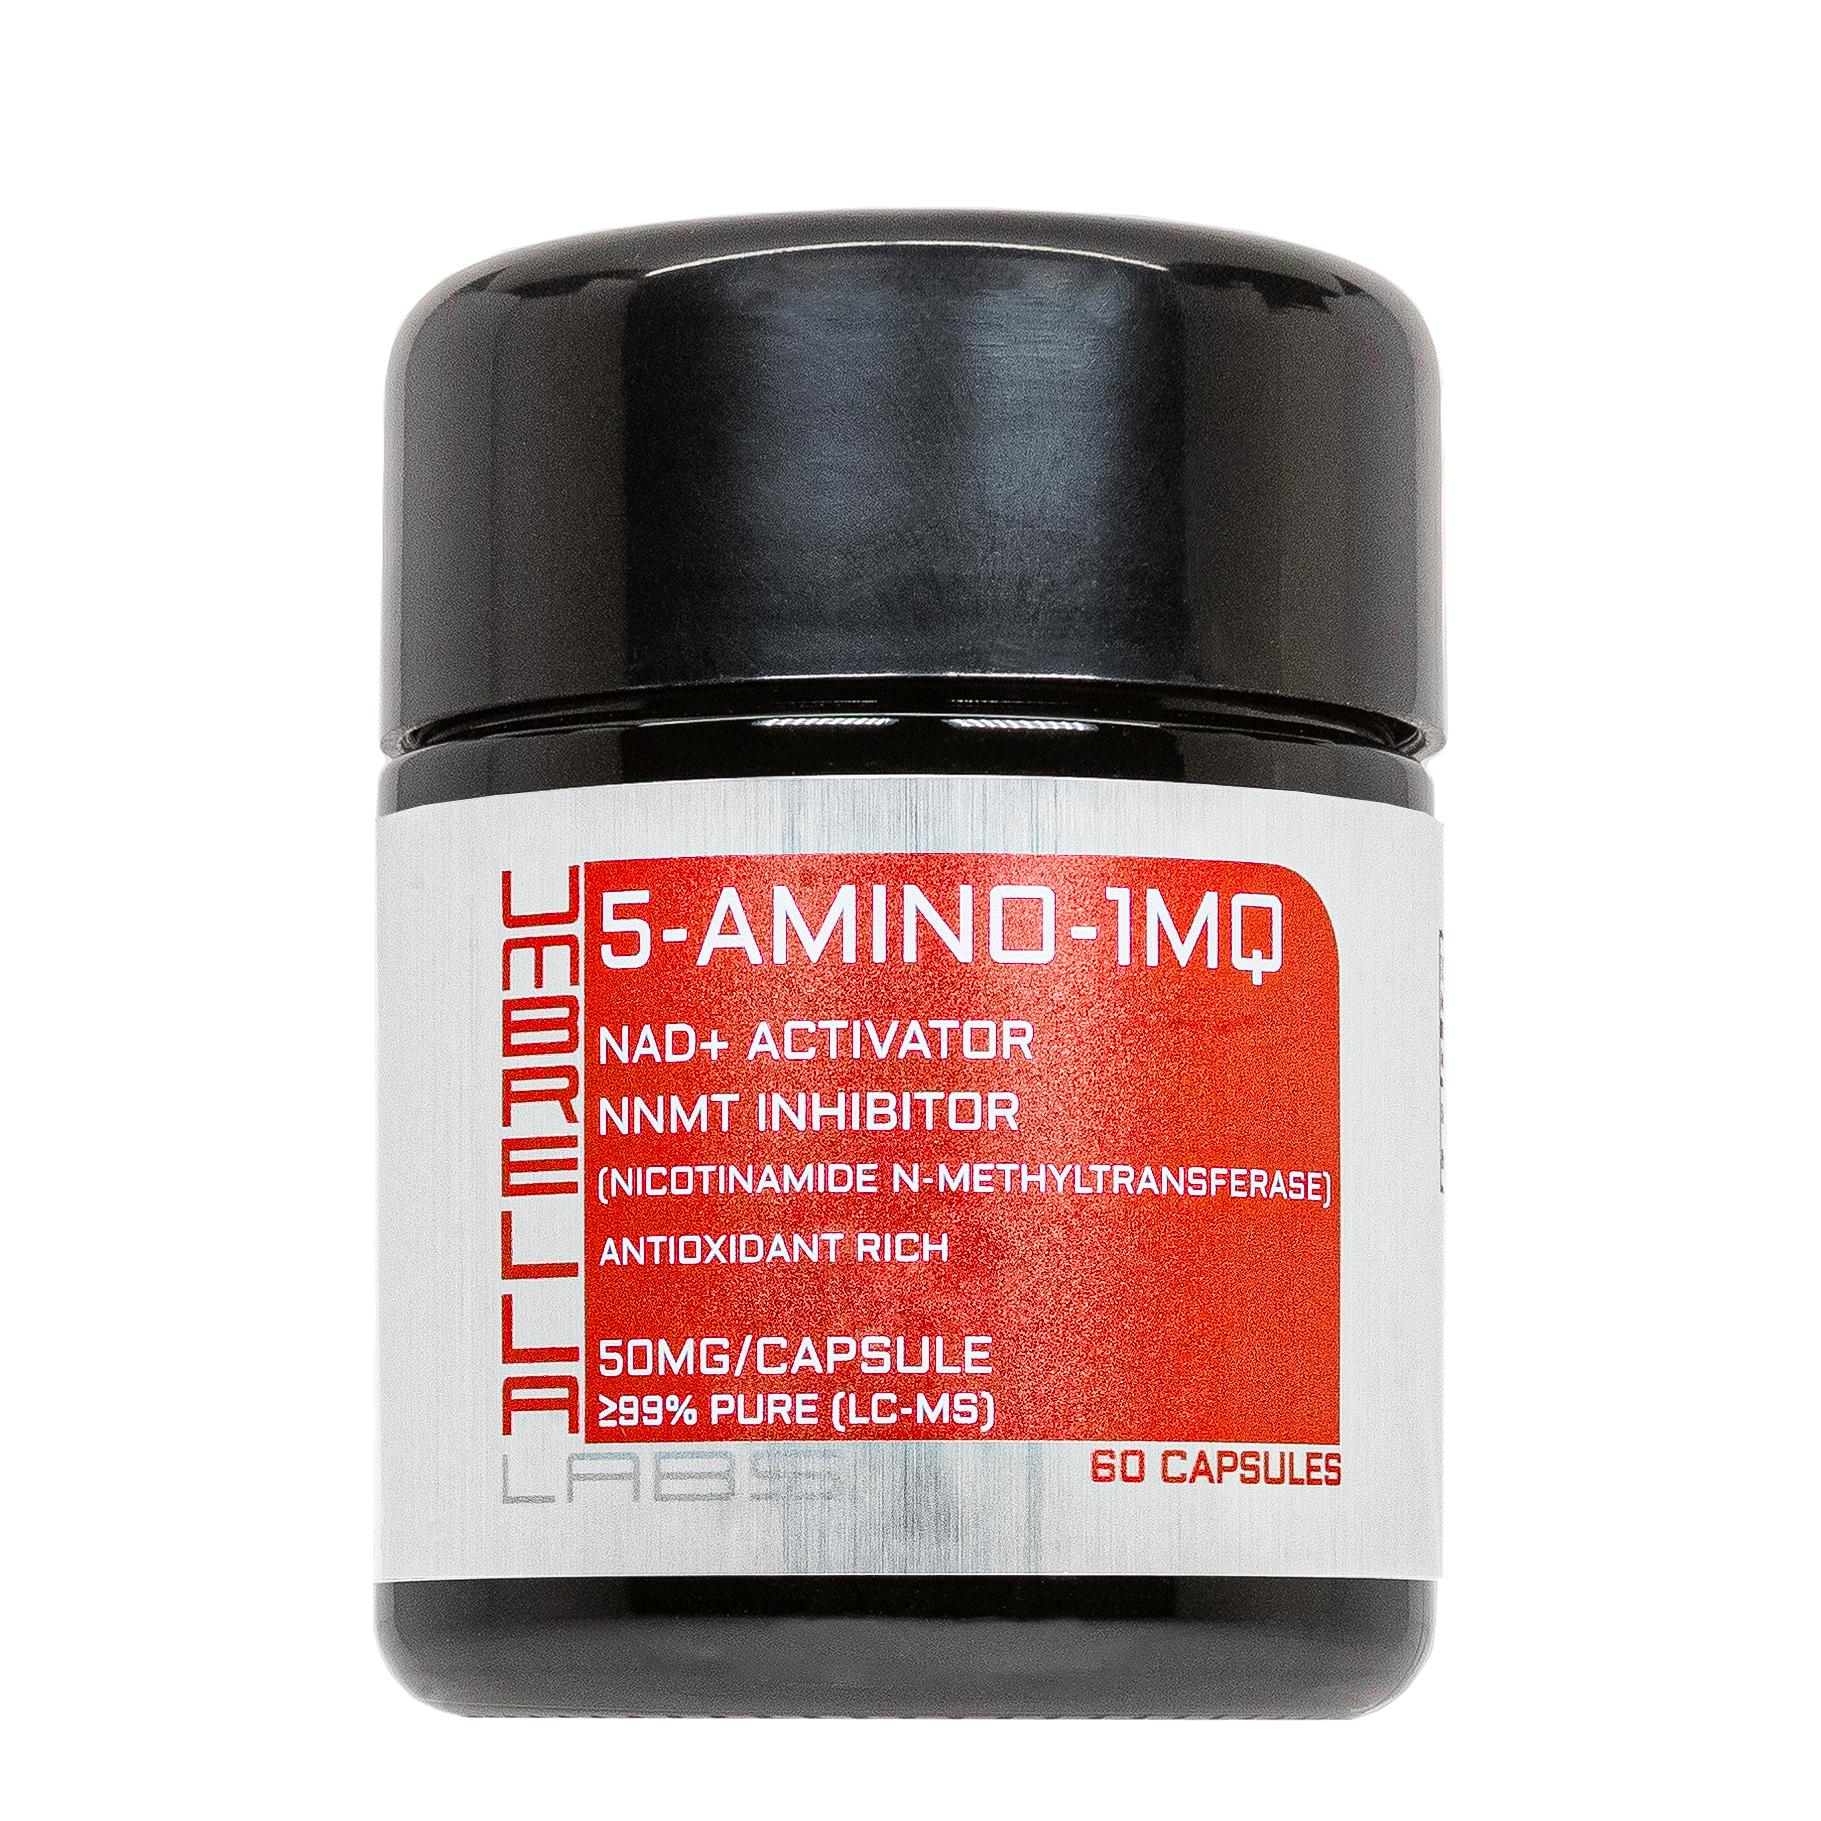 5 amino 1mq powder (60 capsules)